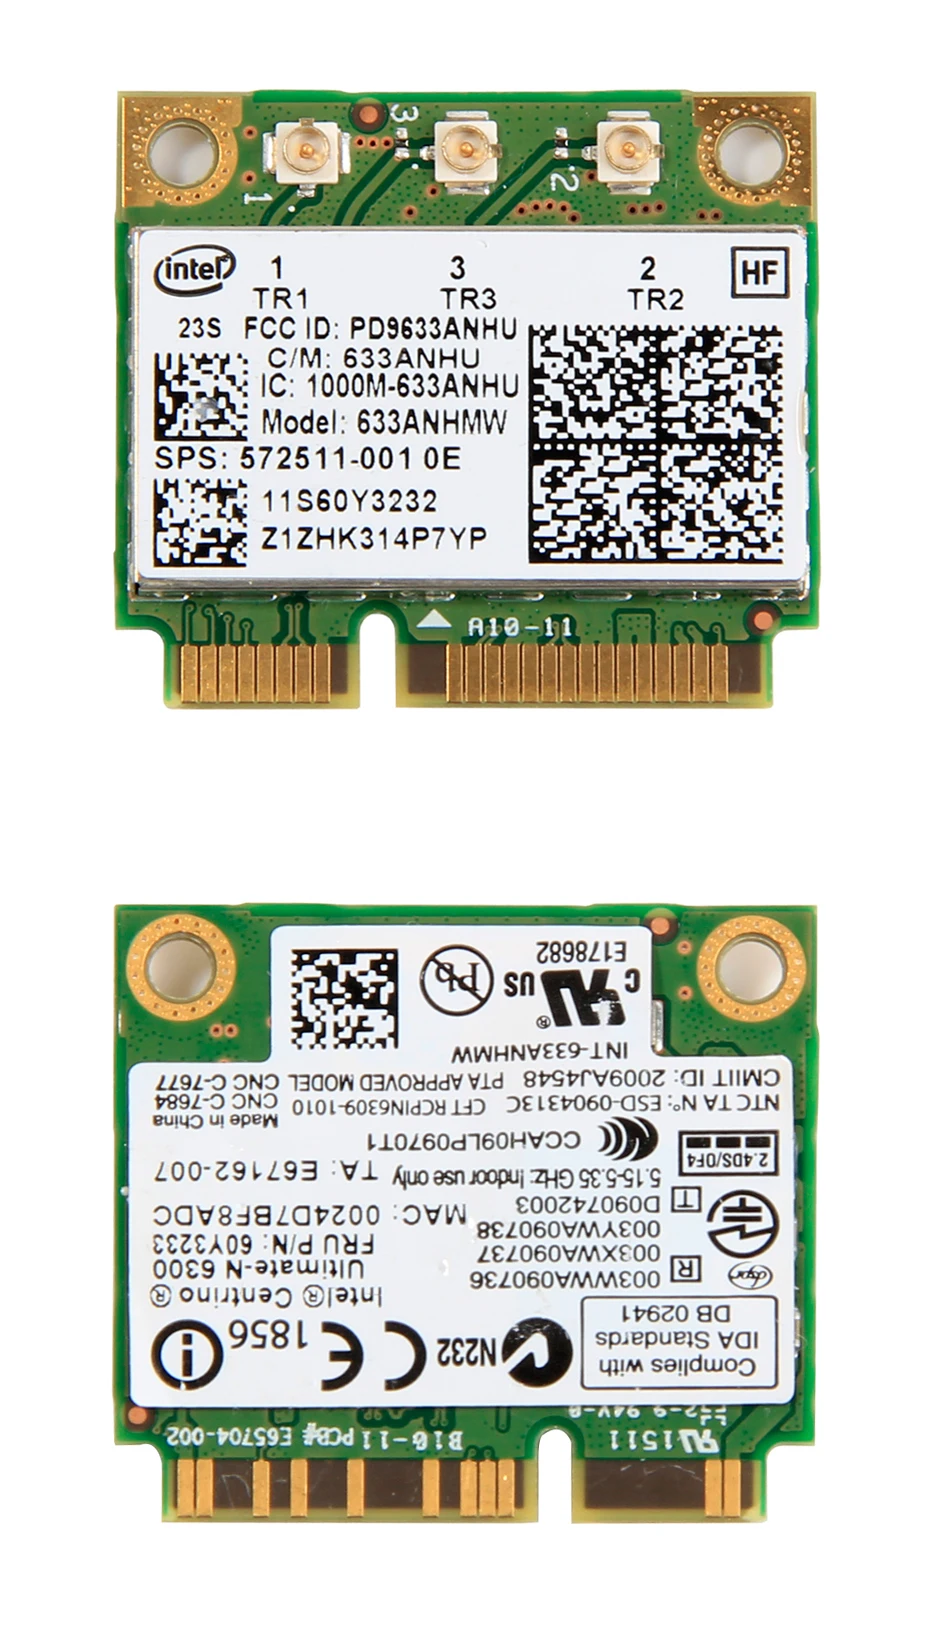 Двухдиапазонная 450 Мбит/с 633ANHMW Mini PCI-E беспроводная Wifi сетевая карта для ноутбука Intel 6300 6300AGN 802.11a/g/n lenovo Thinkpad/hp